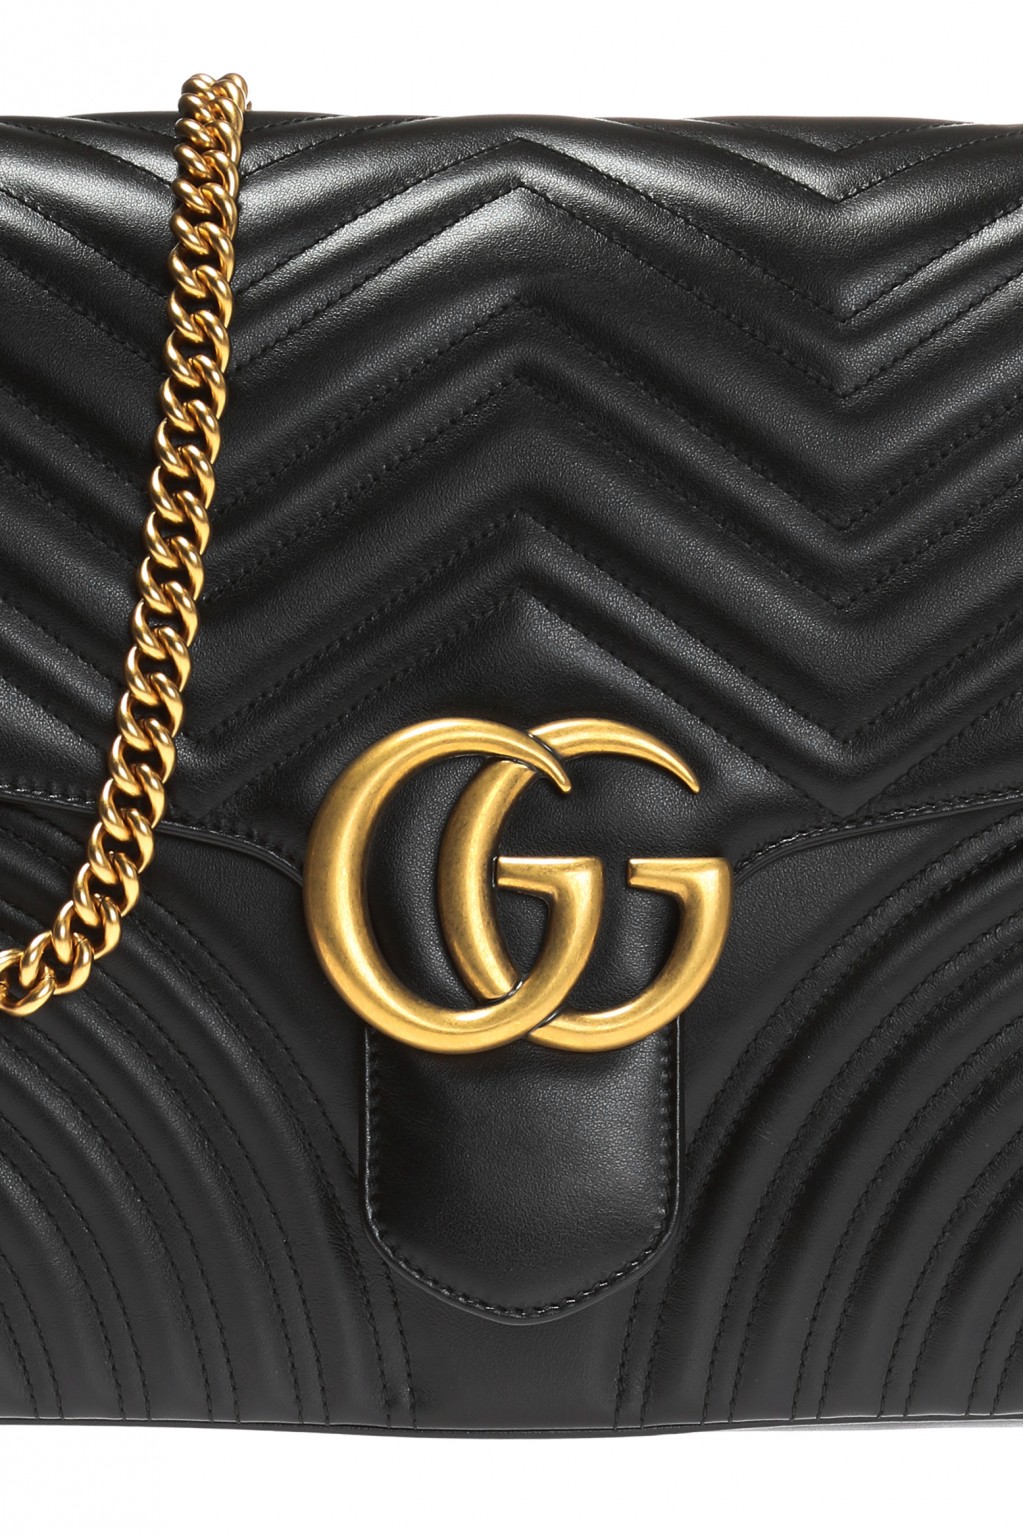 Gucci GG Marmont Large Matelasse Leather Shoulder Bag White 498090